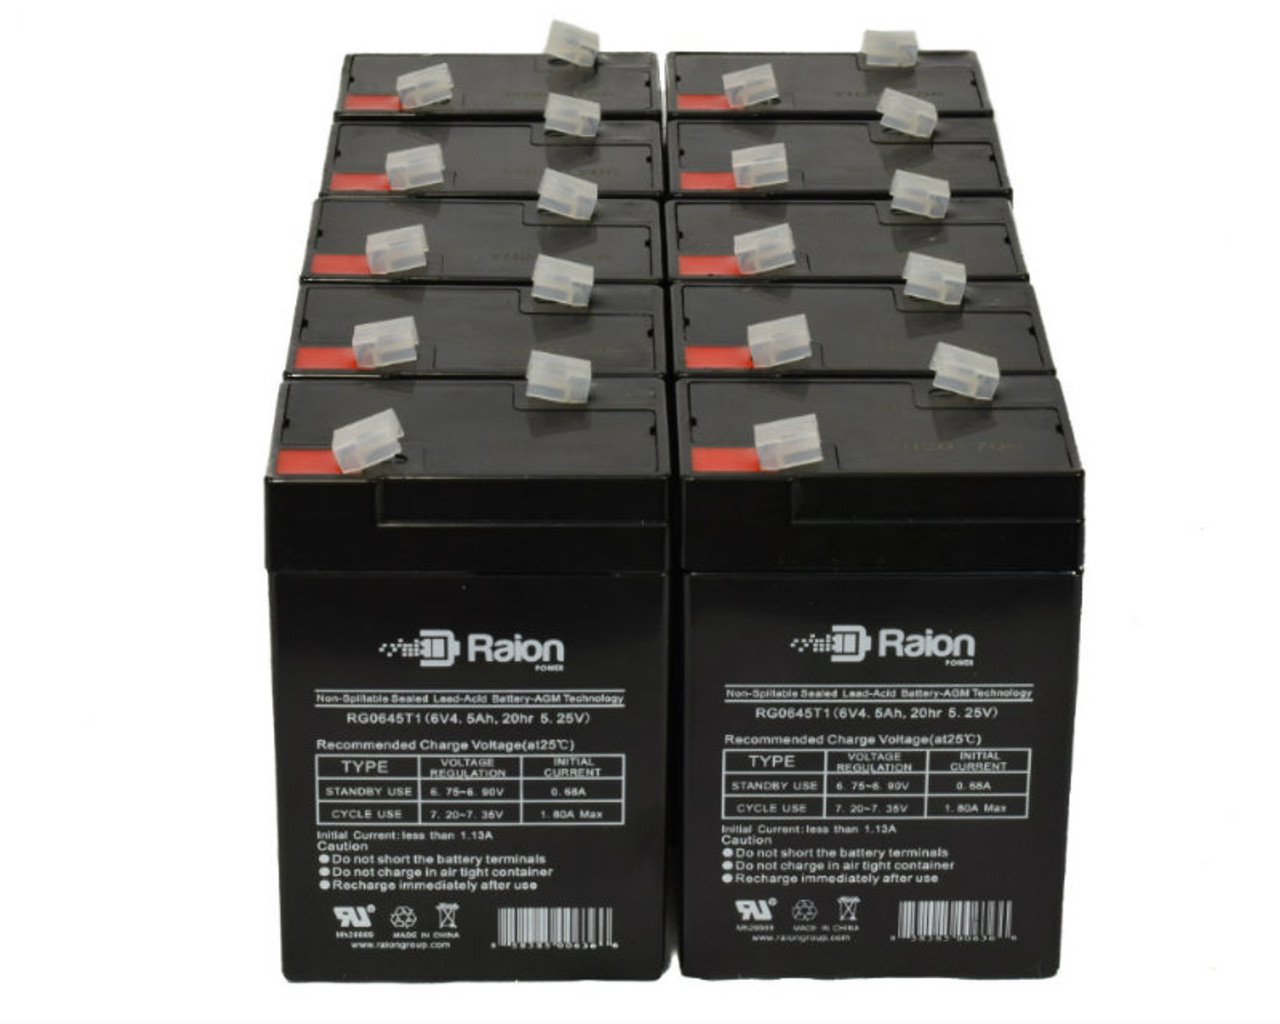 Raion Power 6V 4.5Ah Replacement Emergency Light Battery for Emergi-Lite 12000 - 10 Pack